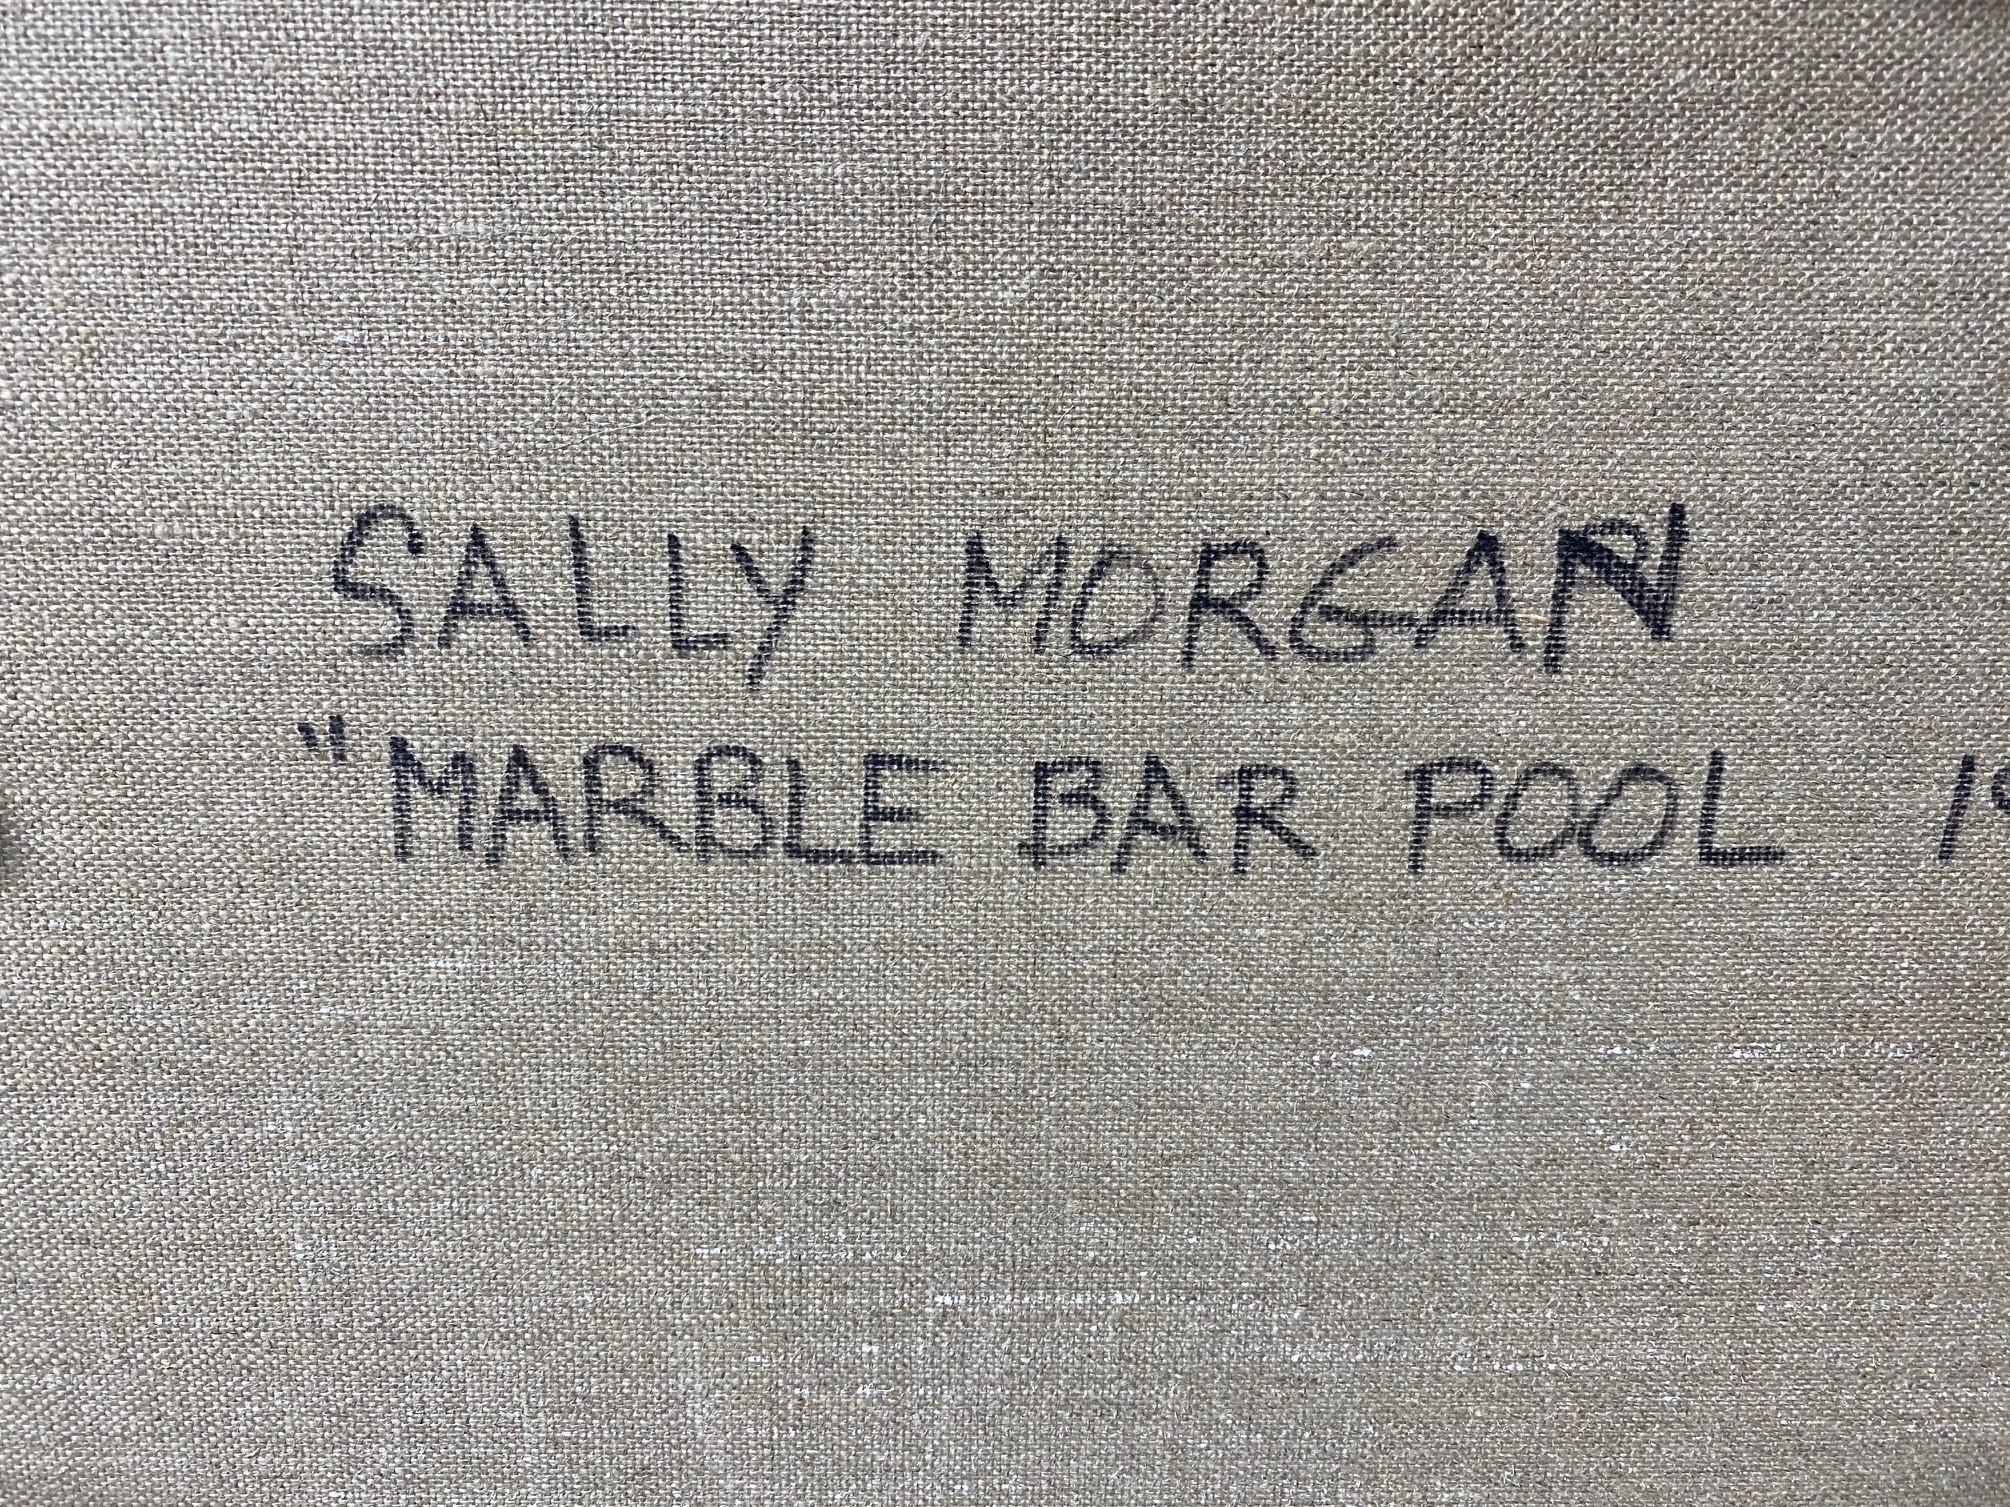 Sally Morgan Signed Australian Aboriginal Art Original Painting Marble Bar Pool For Sale 7